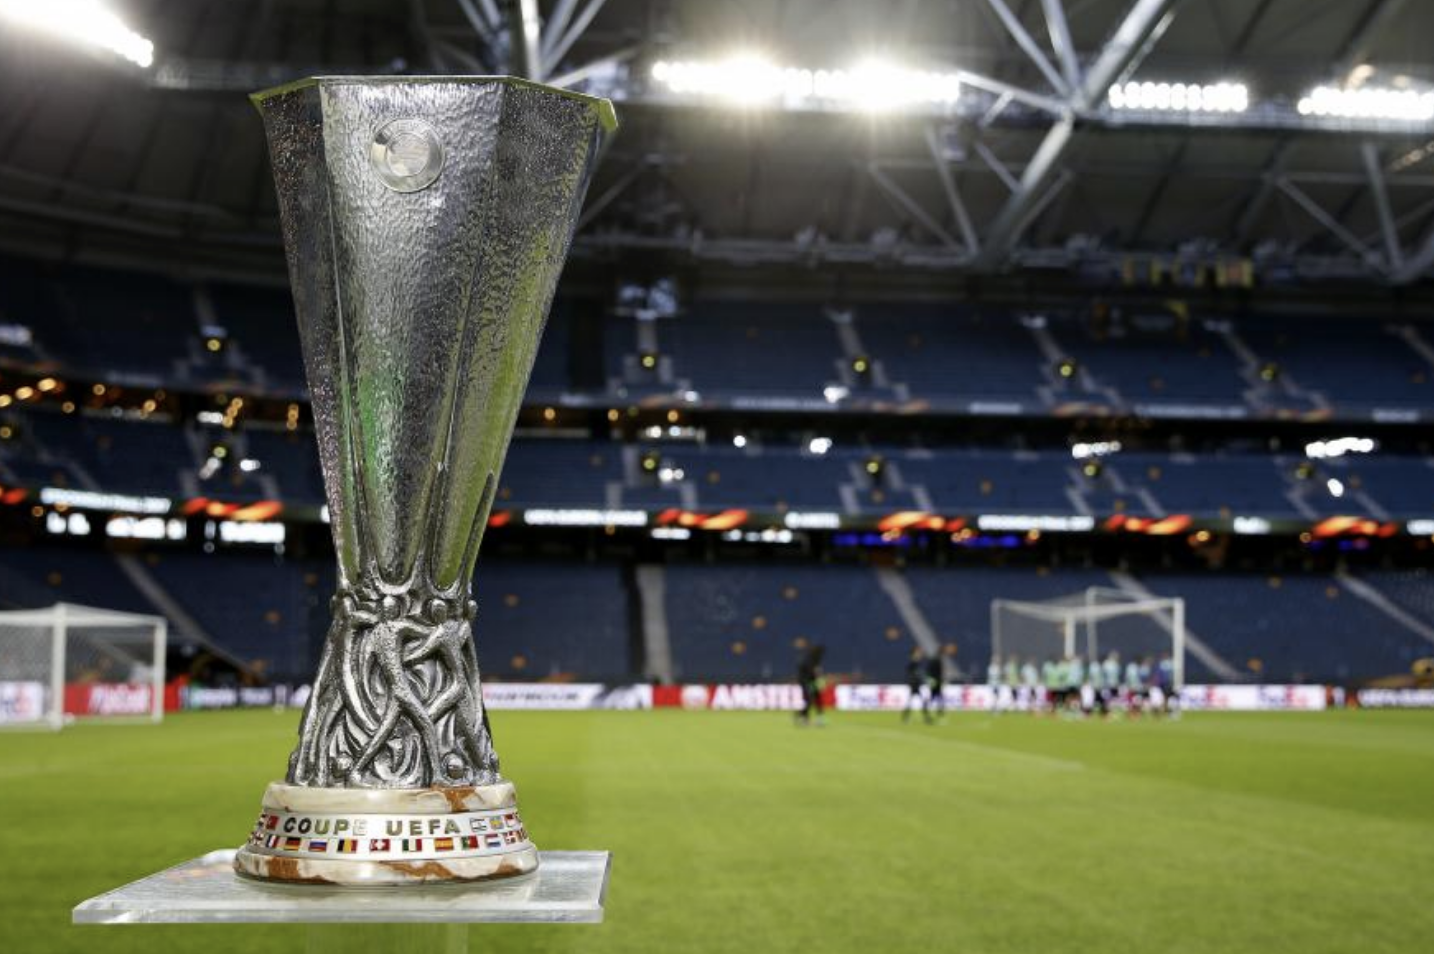 Name The Europa League/UEFA Cup Winners Since 1990 | Football ...